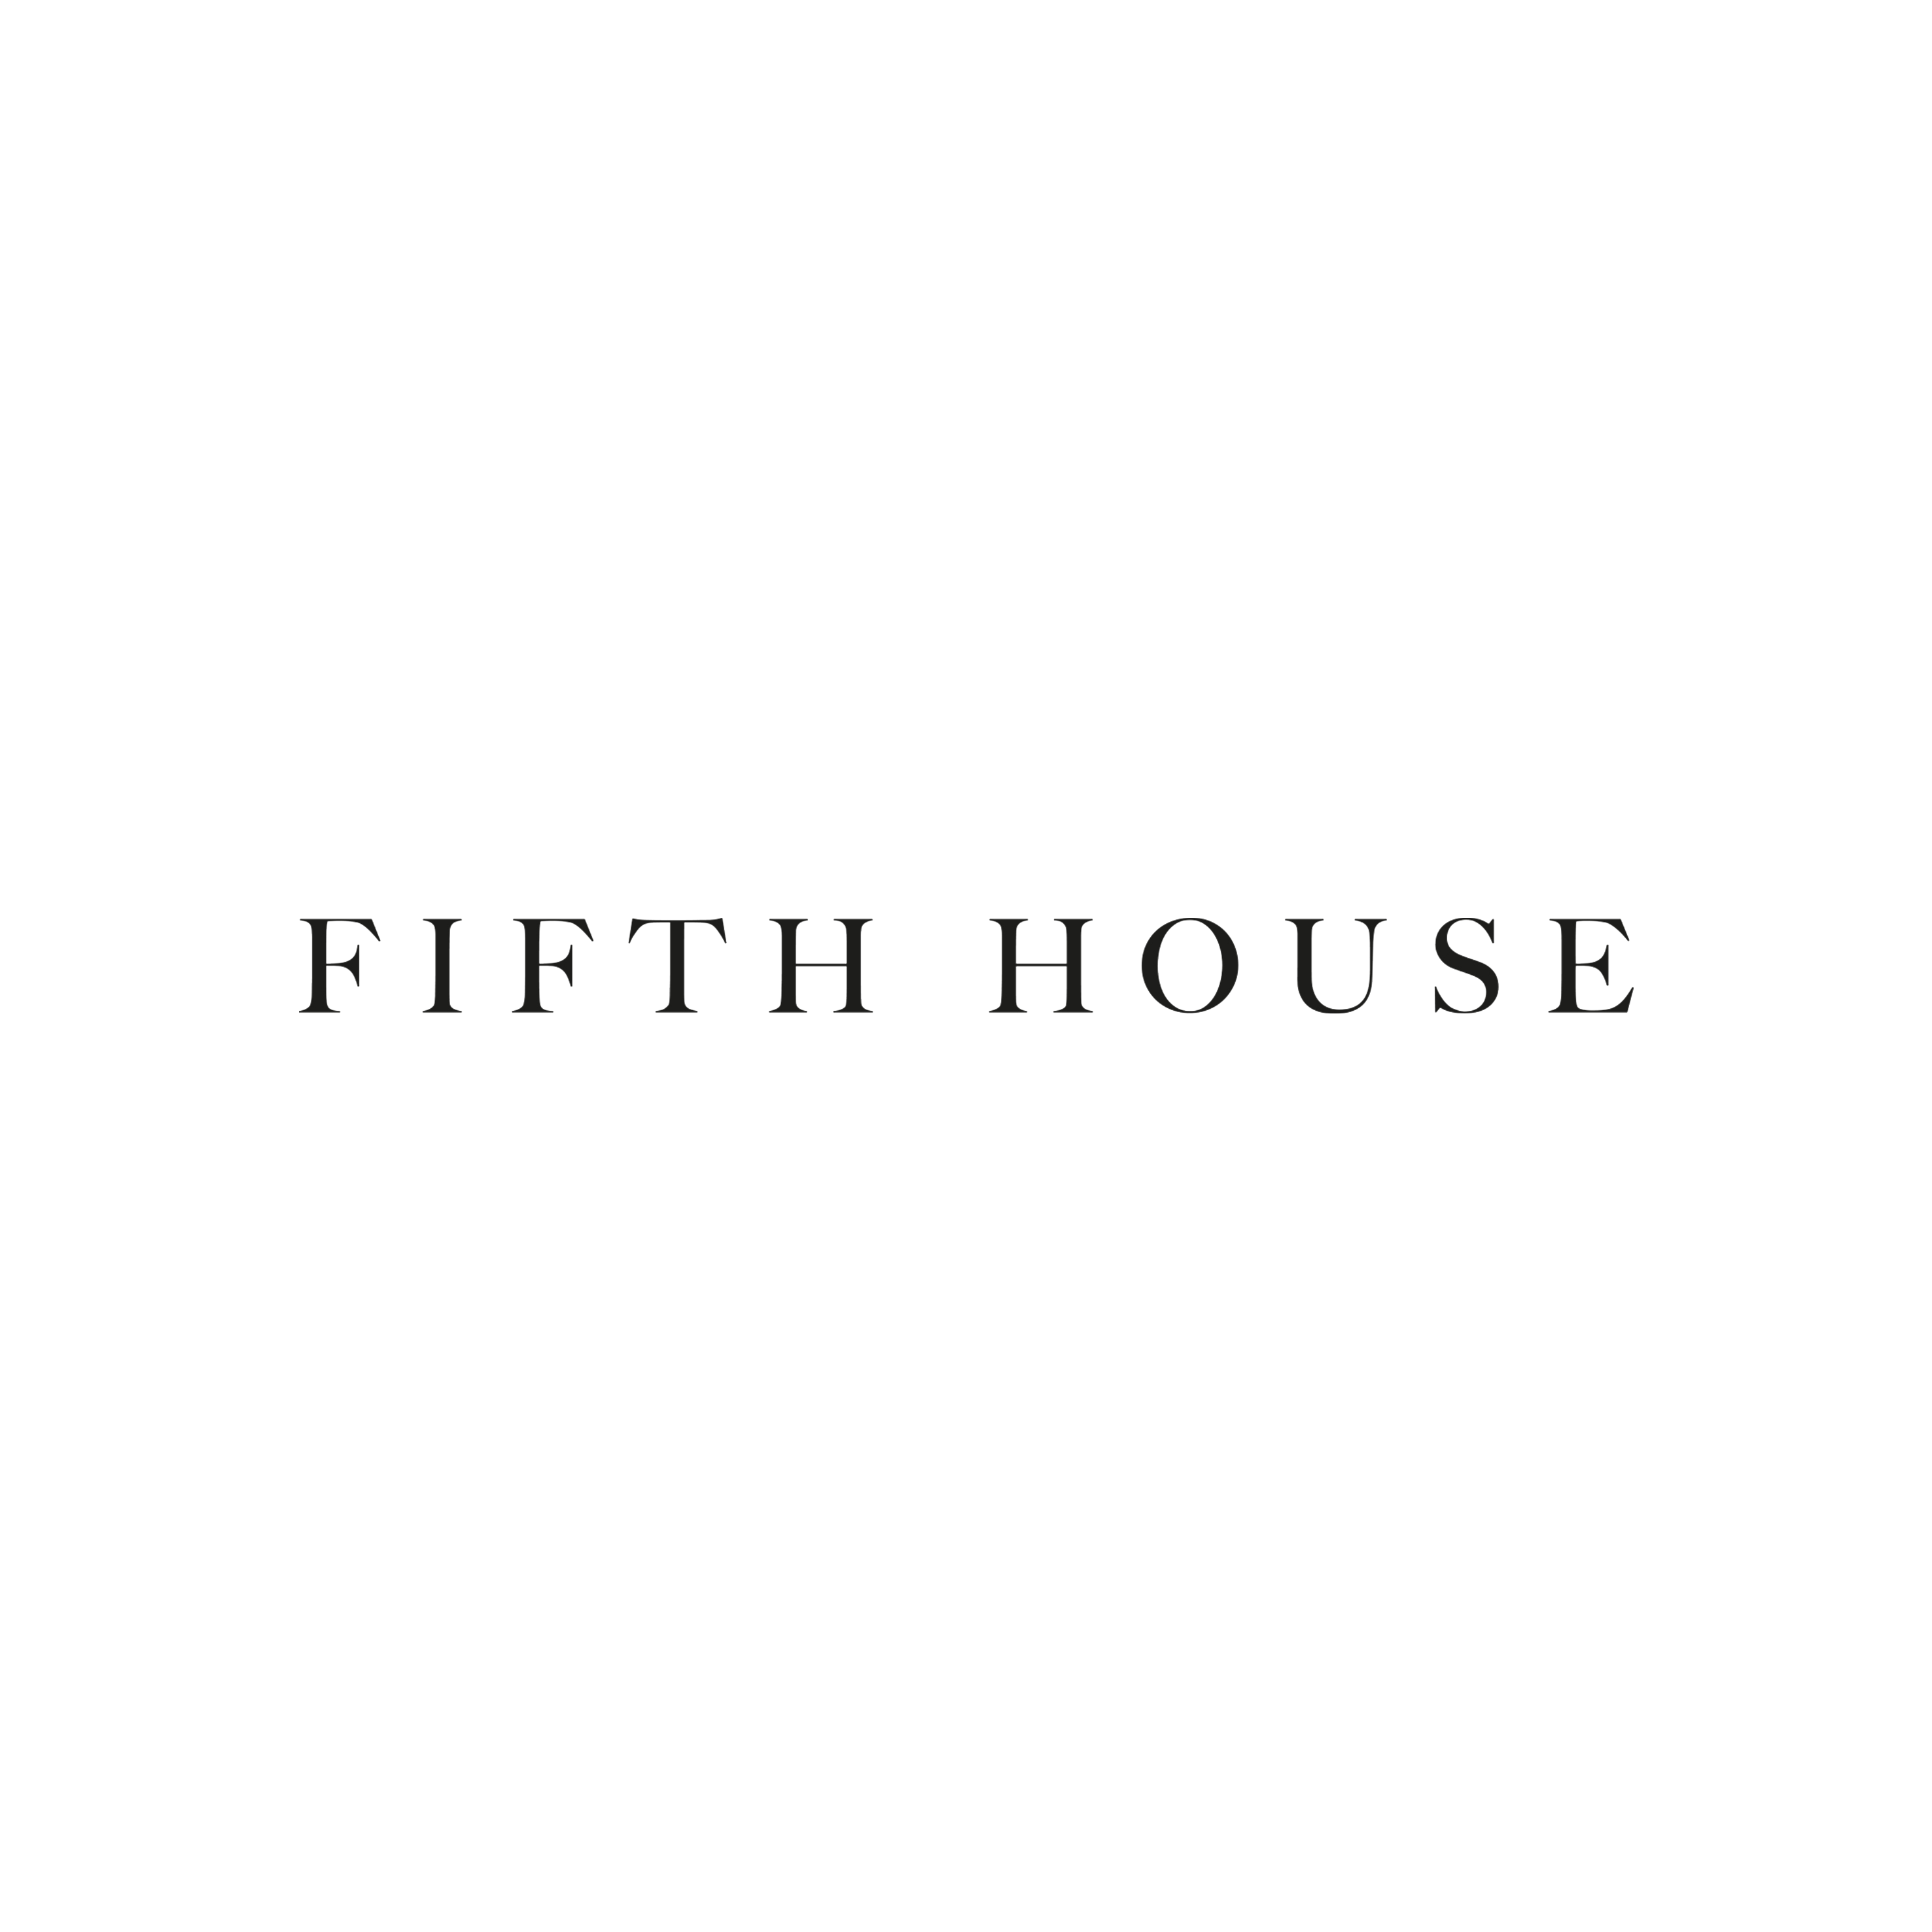 Fifth House logo